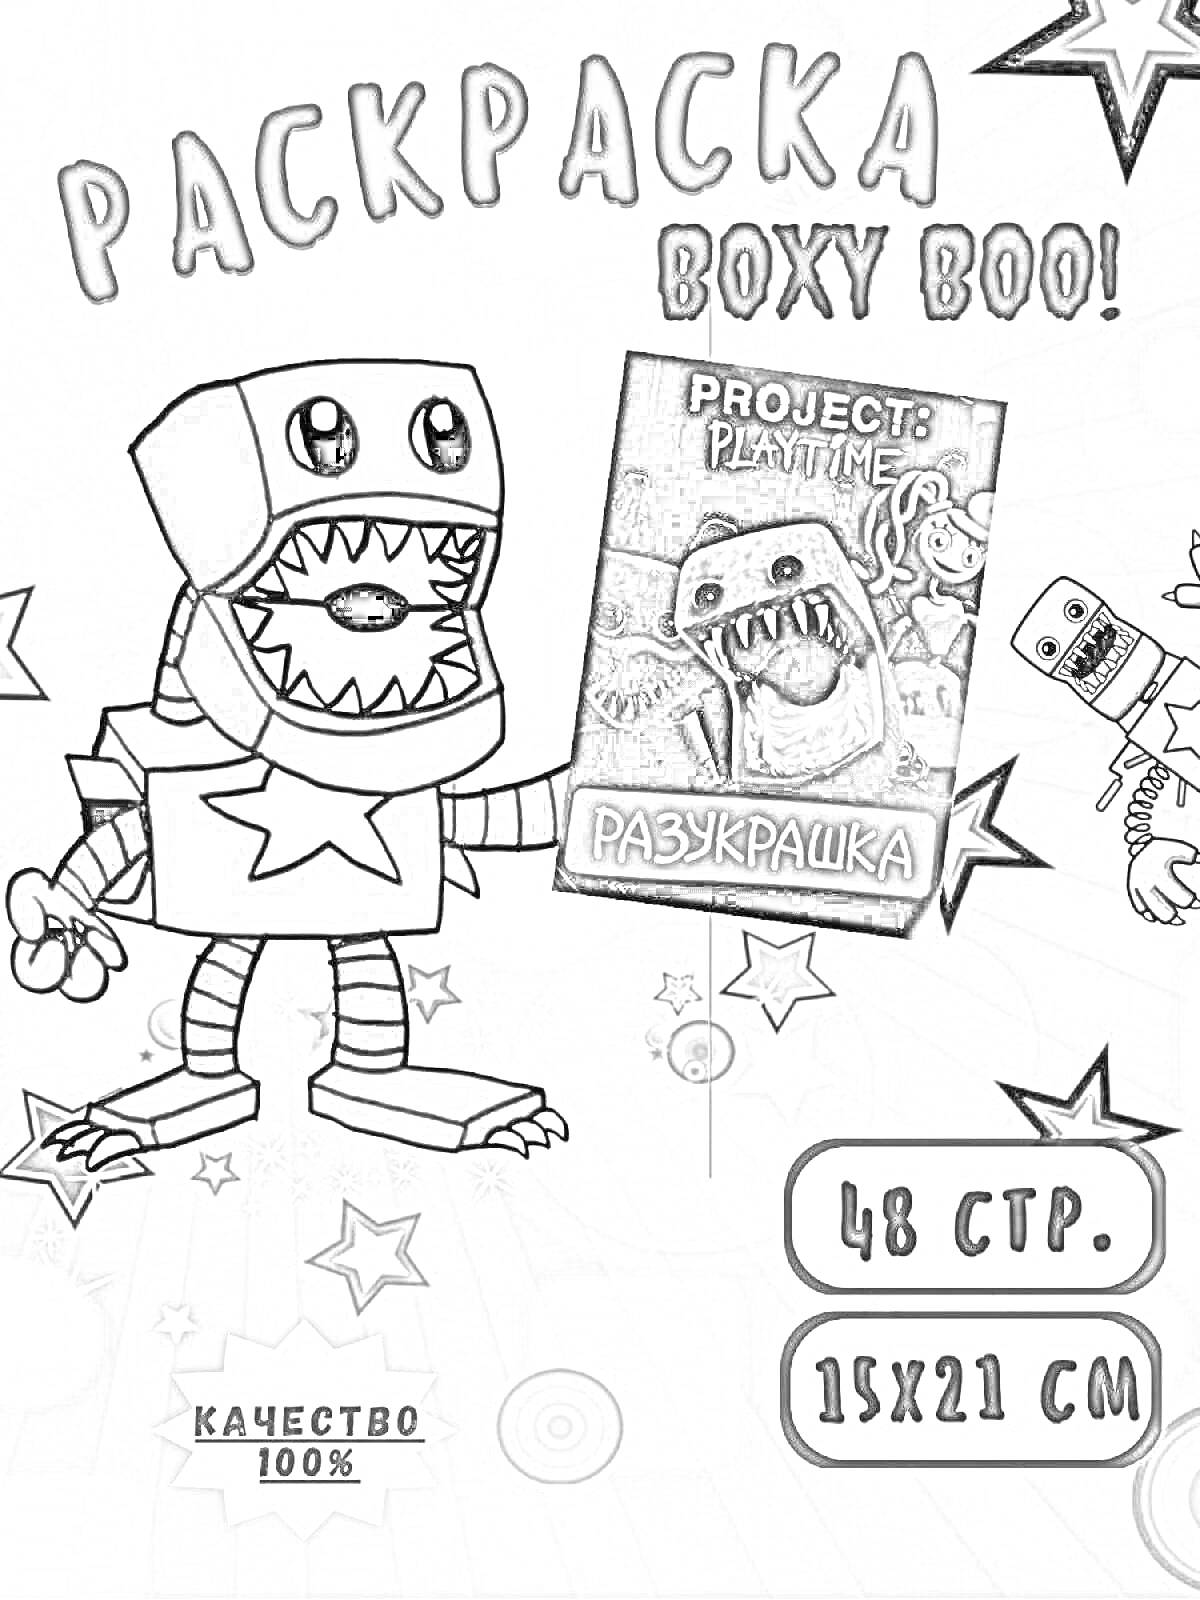 Раскраска Раскраска Boxy Boo с изображением персонажа Project: Playtime, звёзд и значков качества